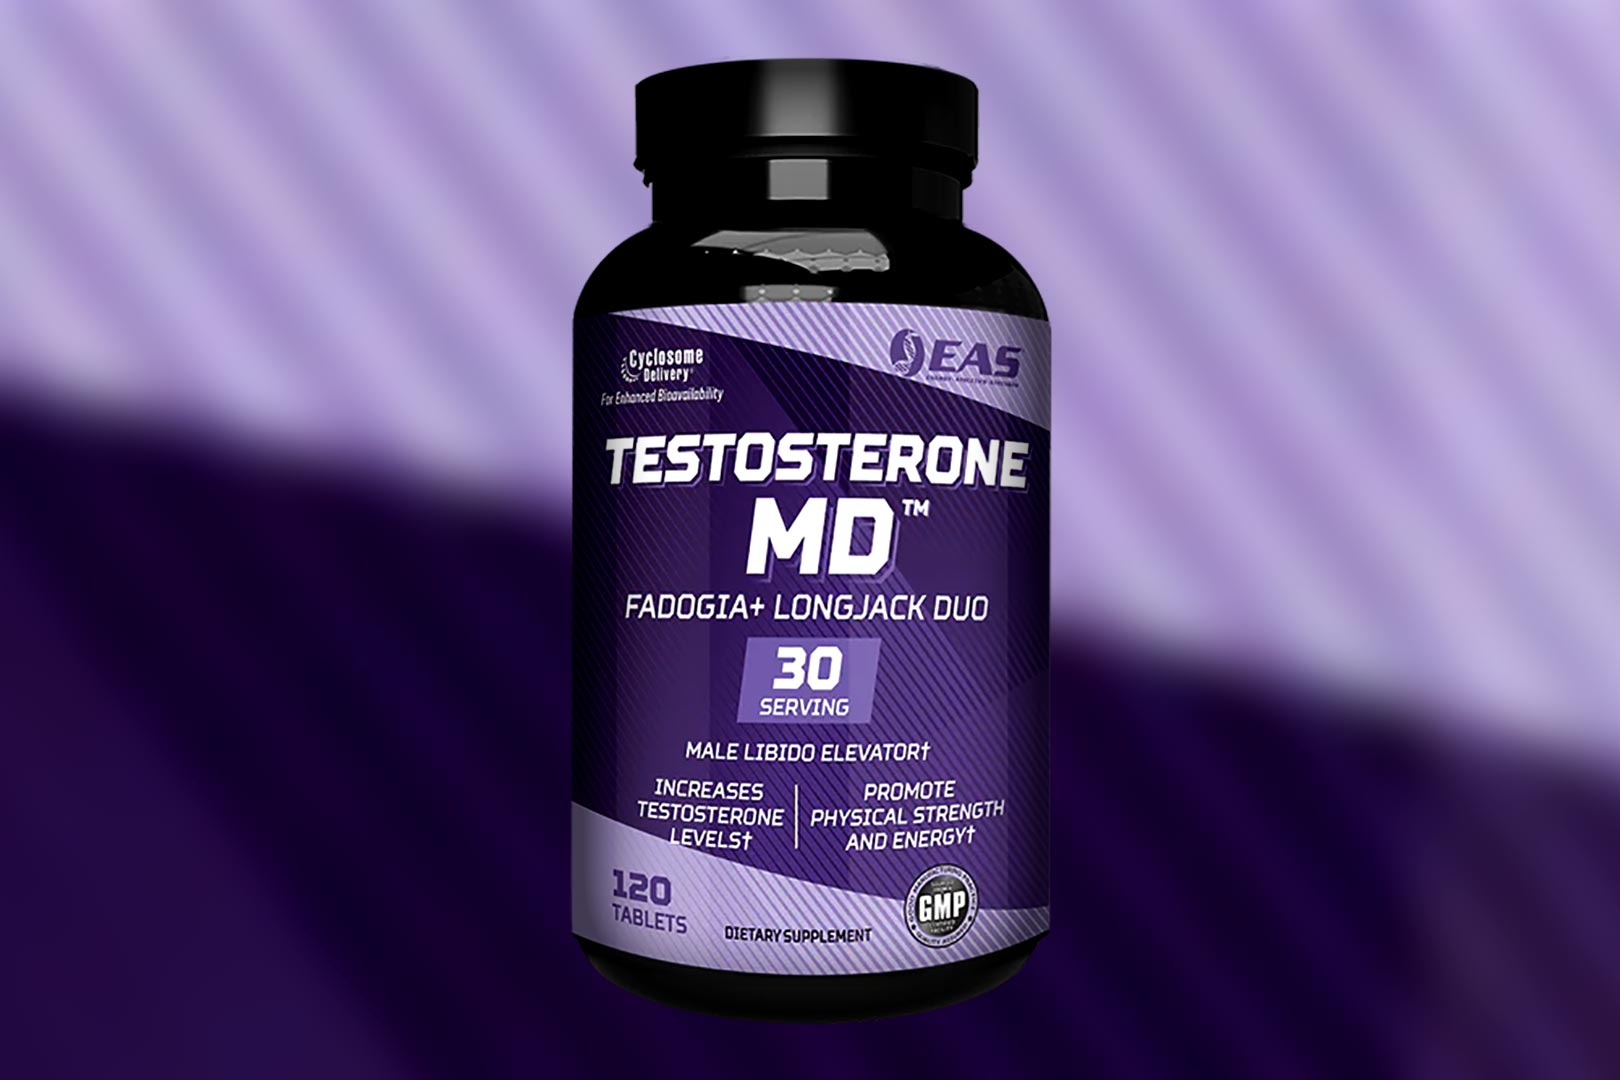 Eas Testosterone Md